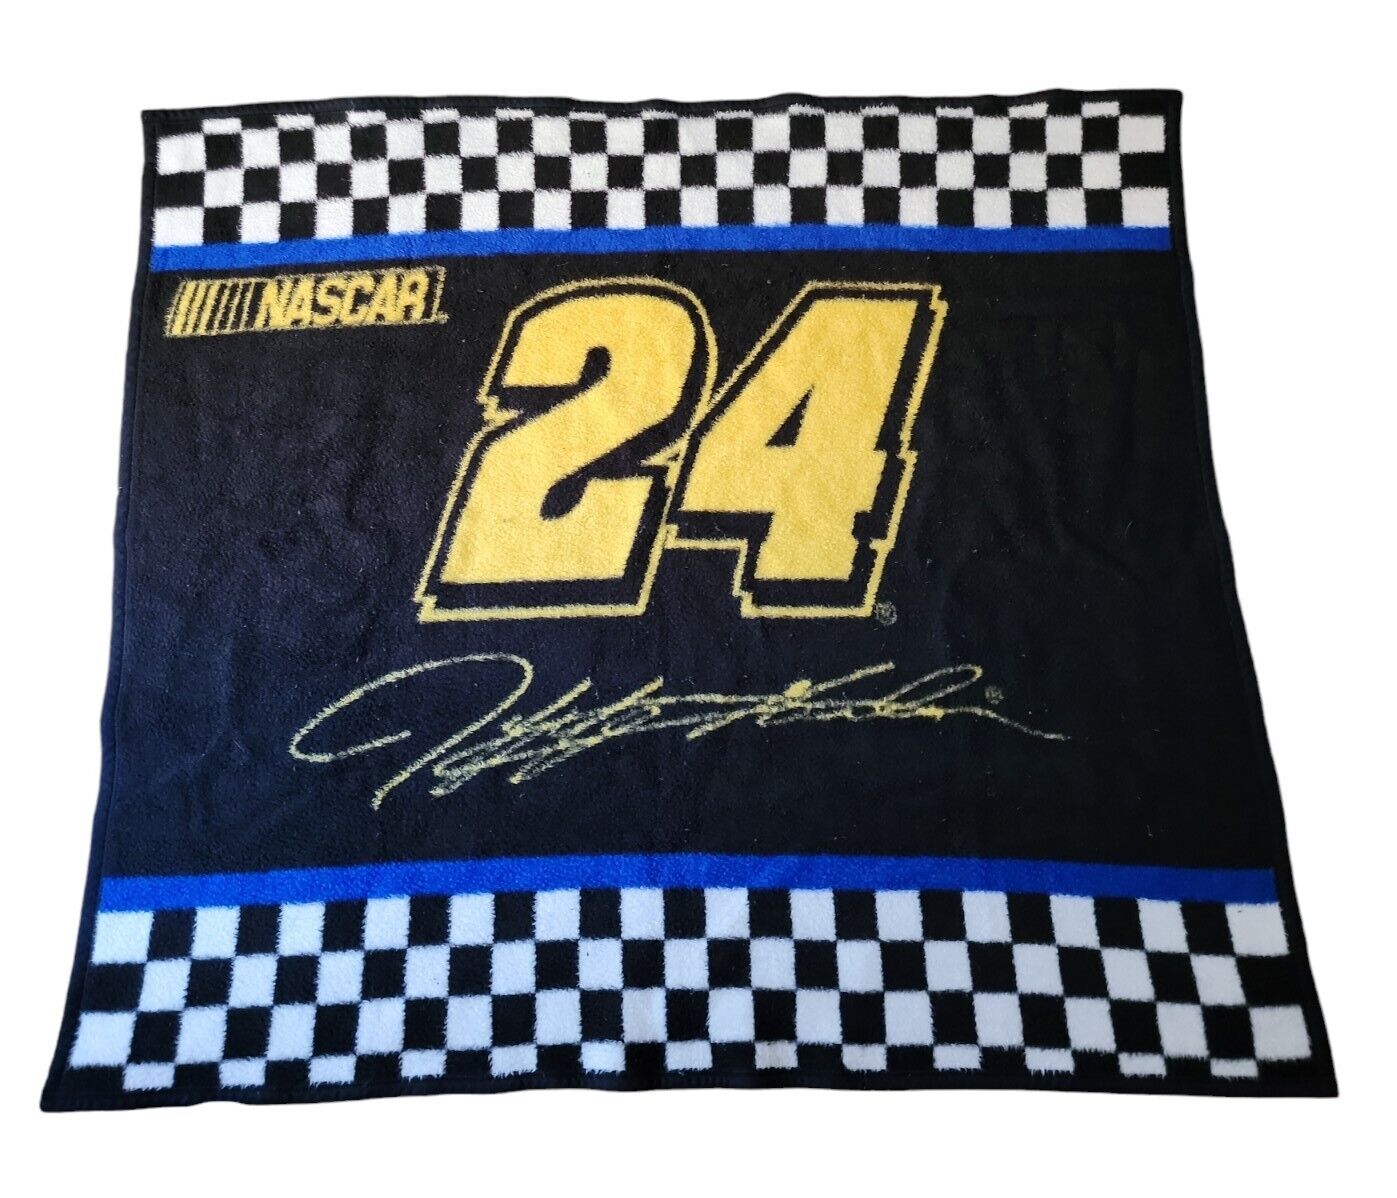 Biederlack of America Blanket NASCAR #24 Jeff Gordon Racing Made in USA 53x49 